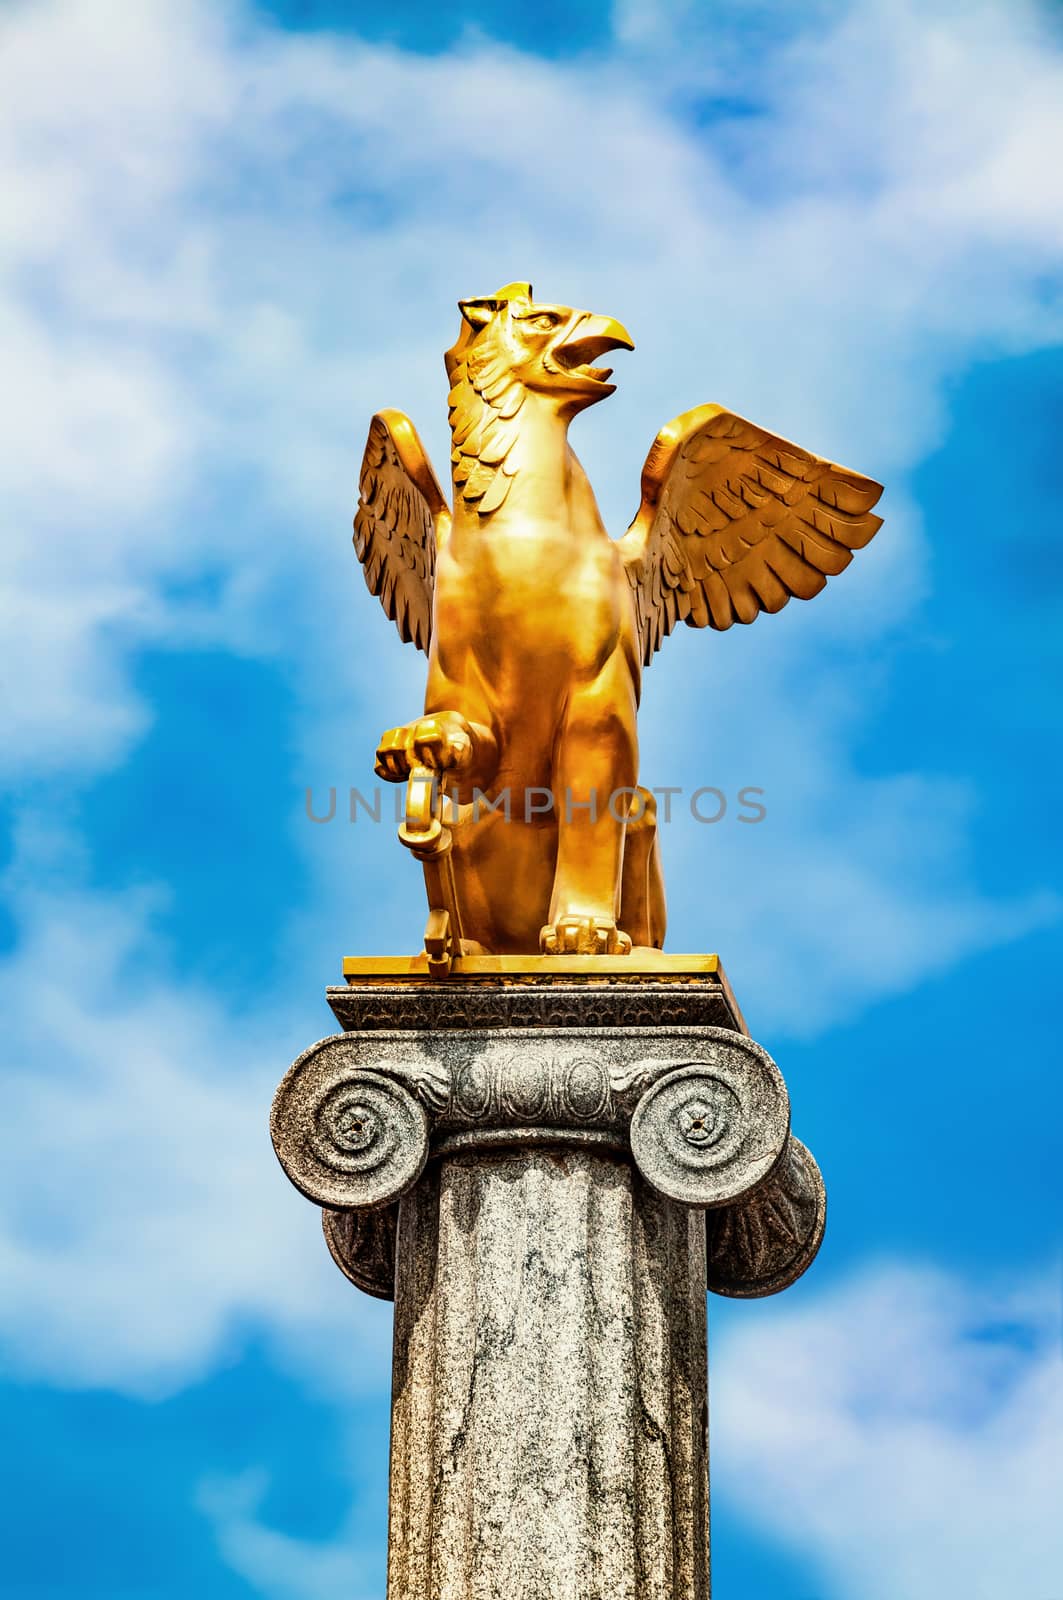 Griffin sculpture on pedestal by zeffss